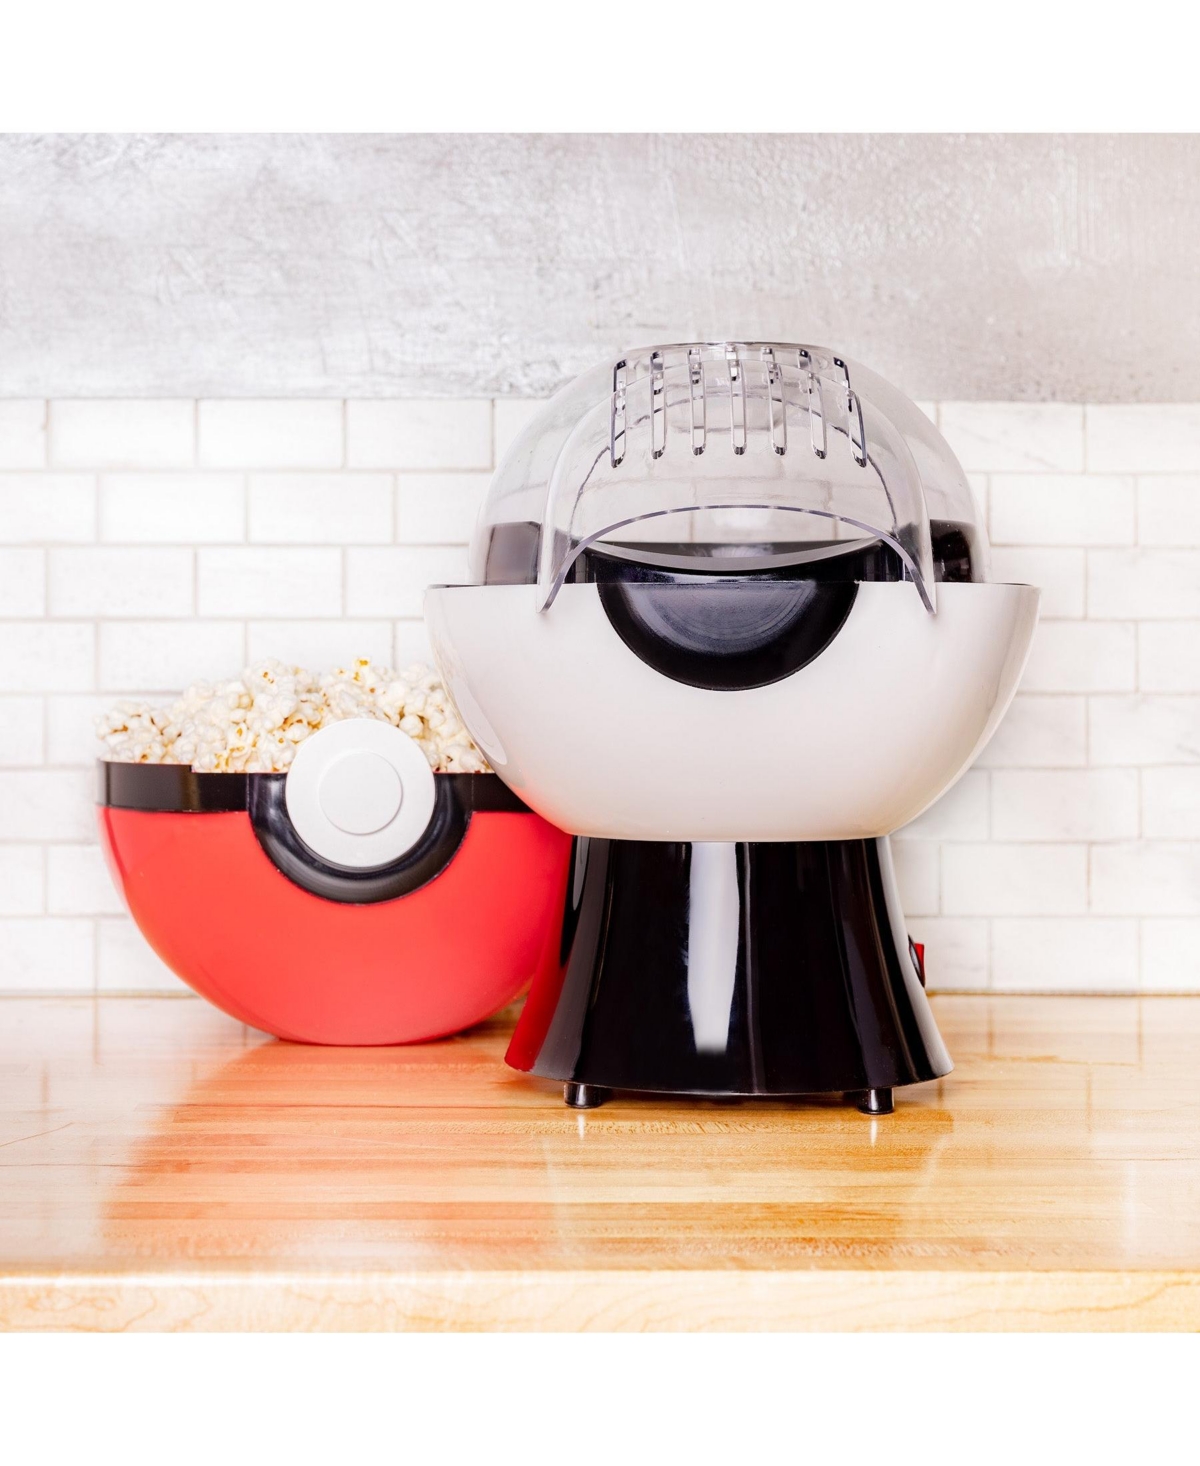 Uncanny Brands Pokemon Pokeball Popcorn Maker - Pokemon Kitchen Appliance In Multi